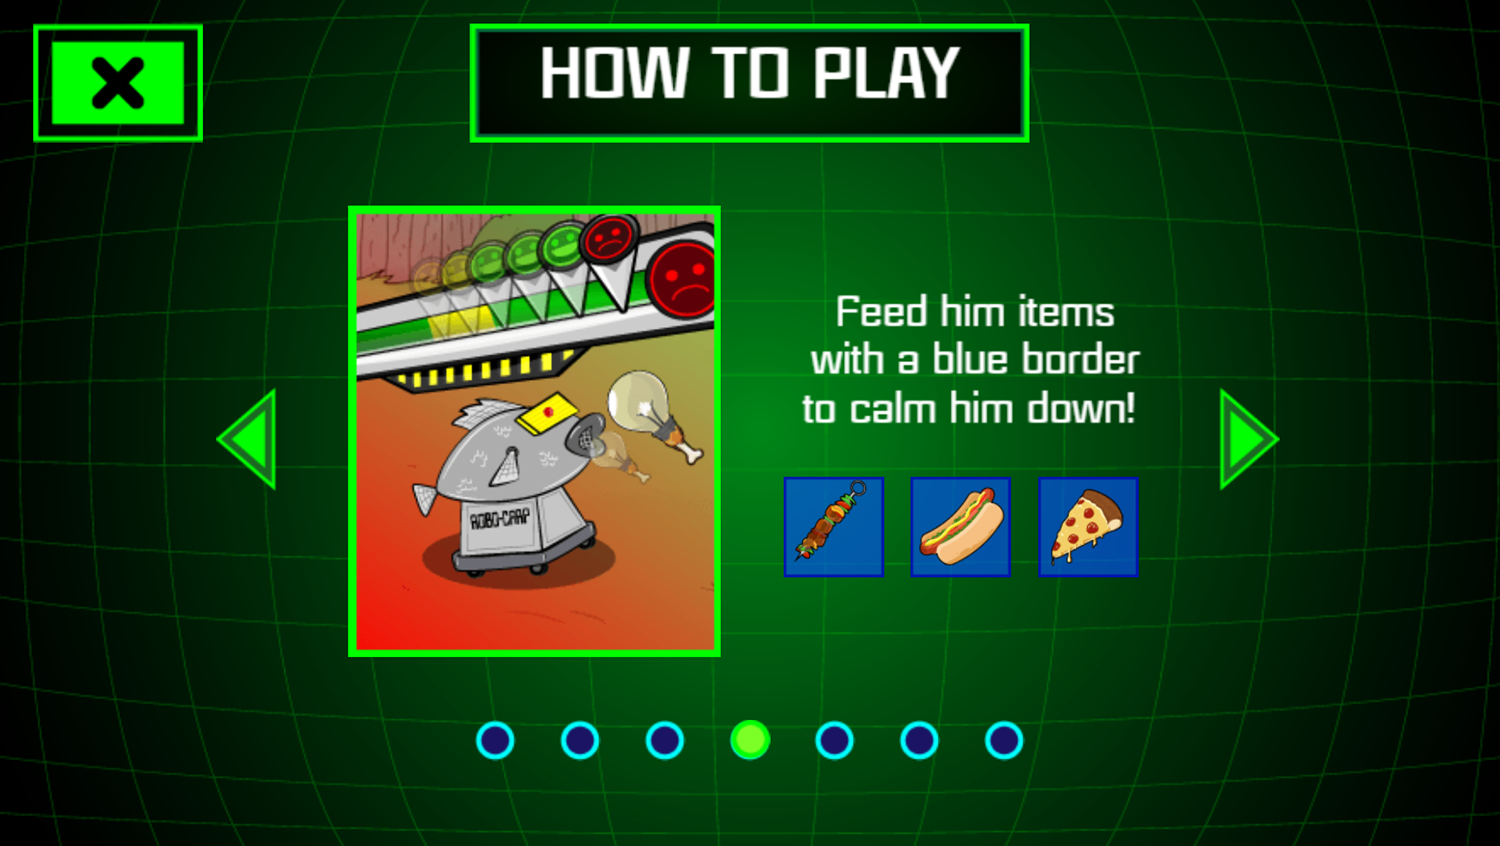 Robo-Carpe Diem Game Instructions Screenshot.